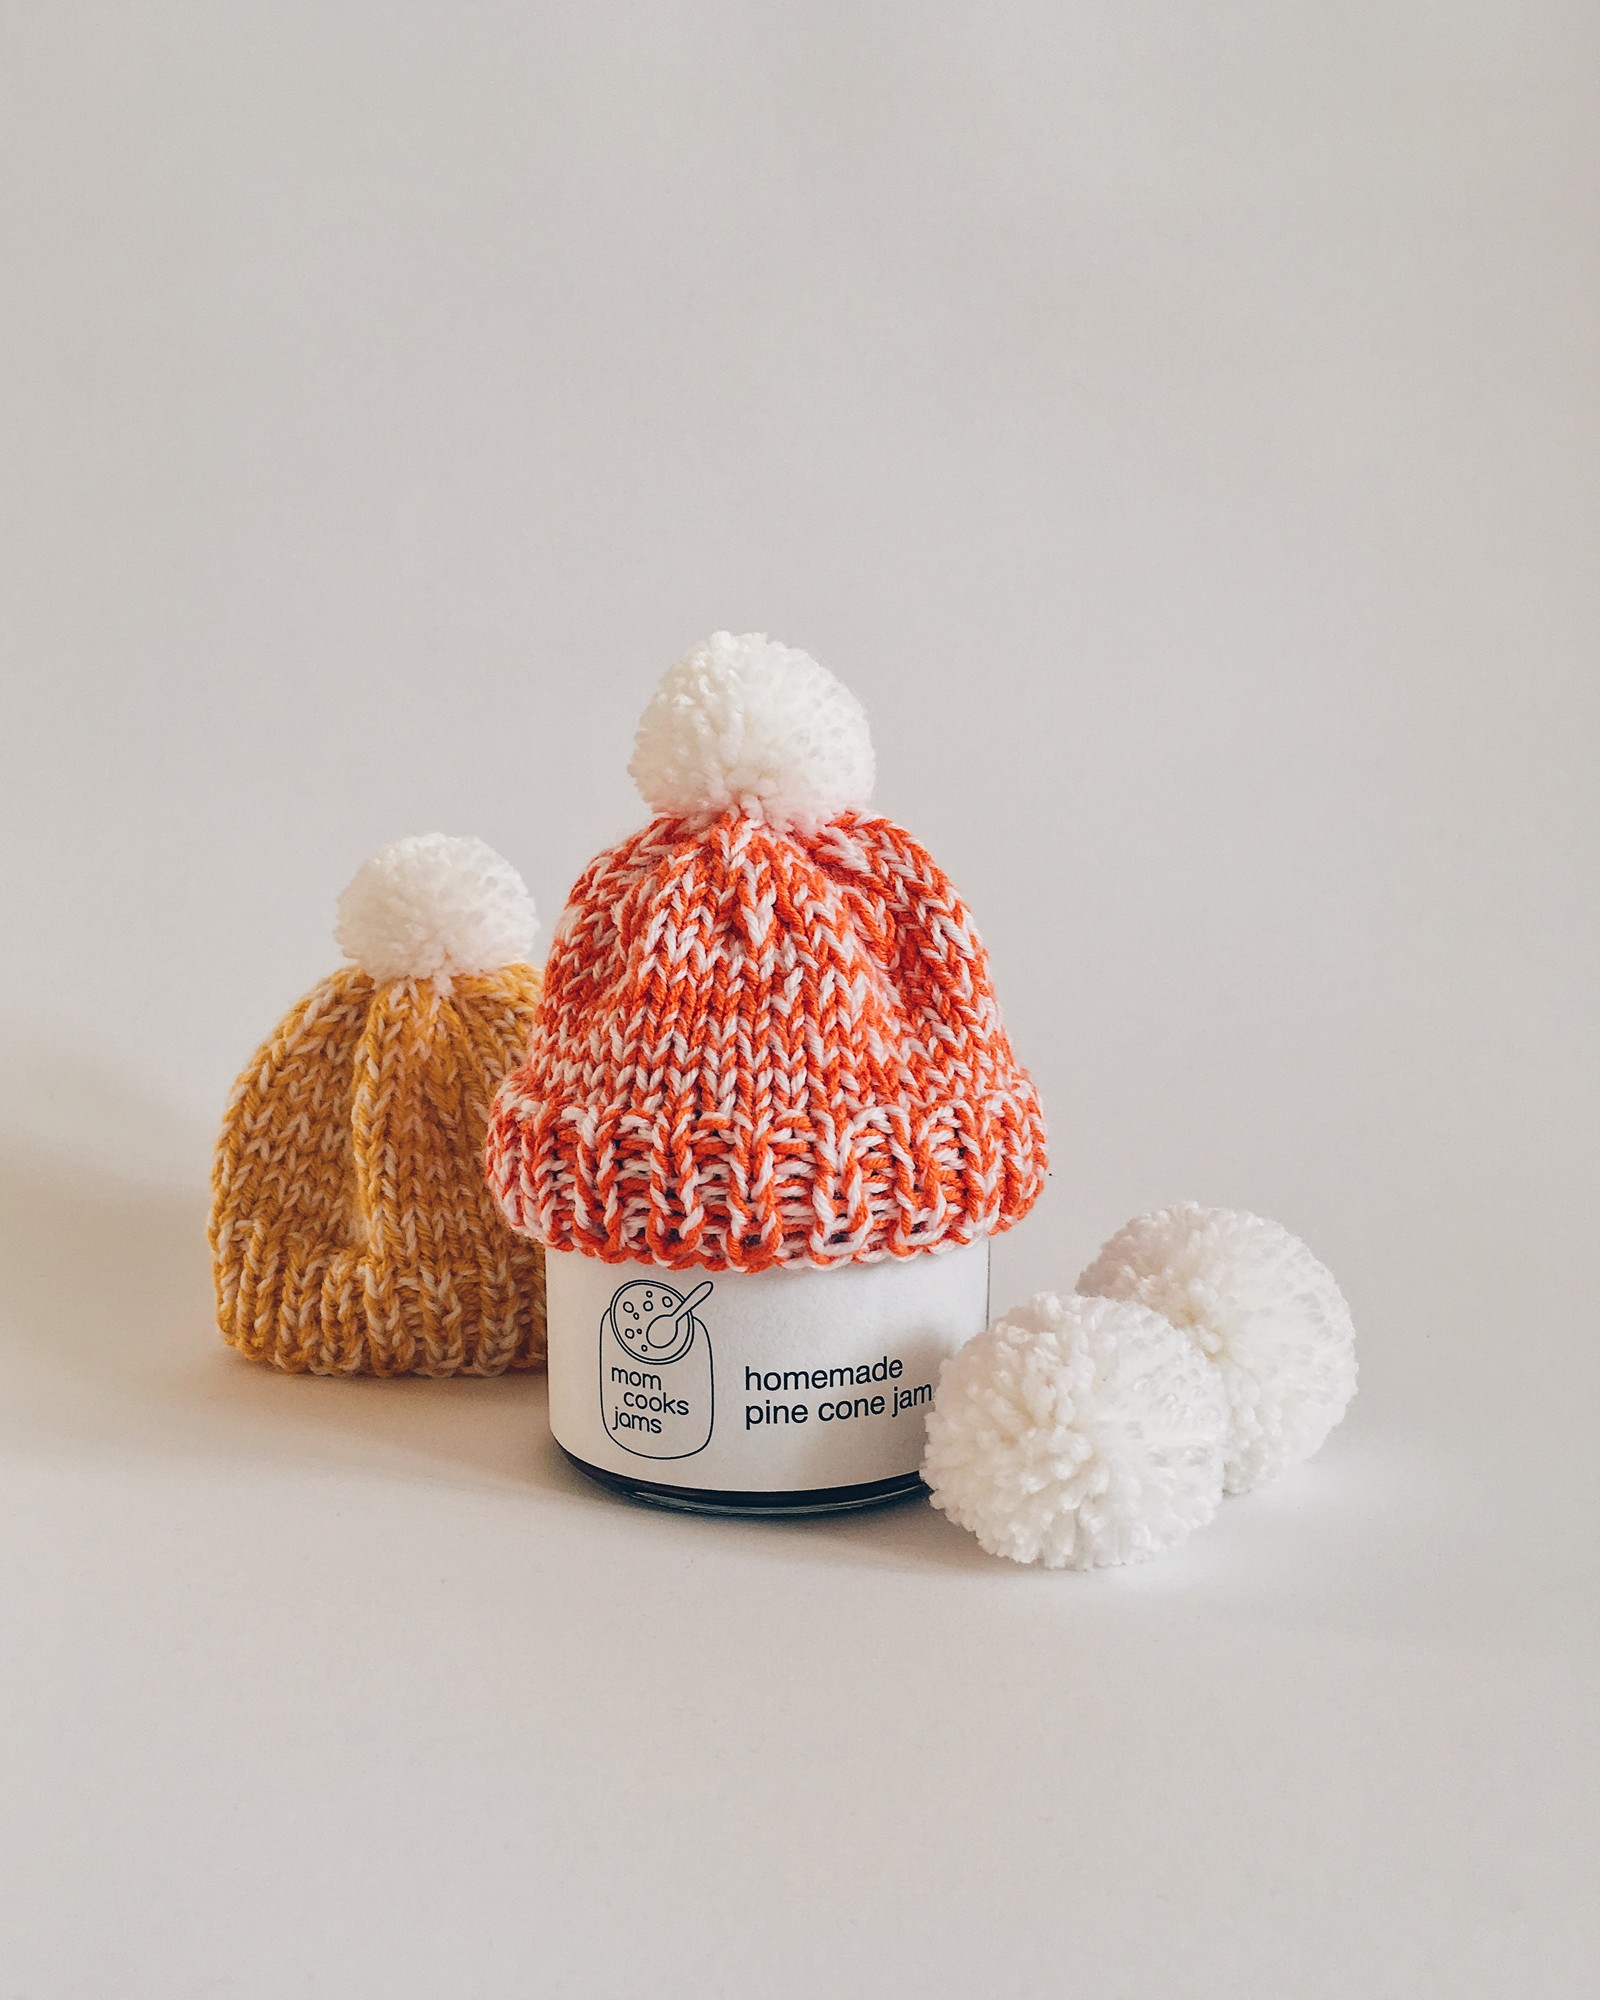 Gift Pine cone jam jar with orange hat from Ukraine